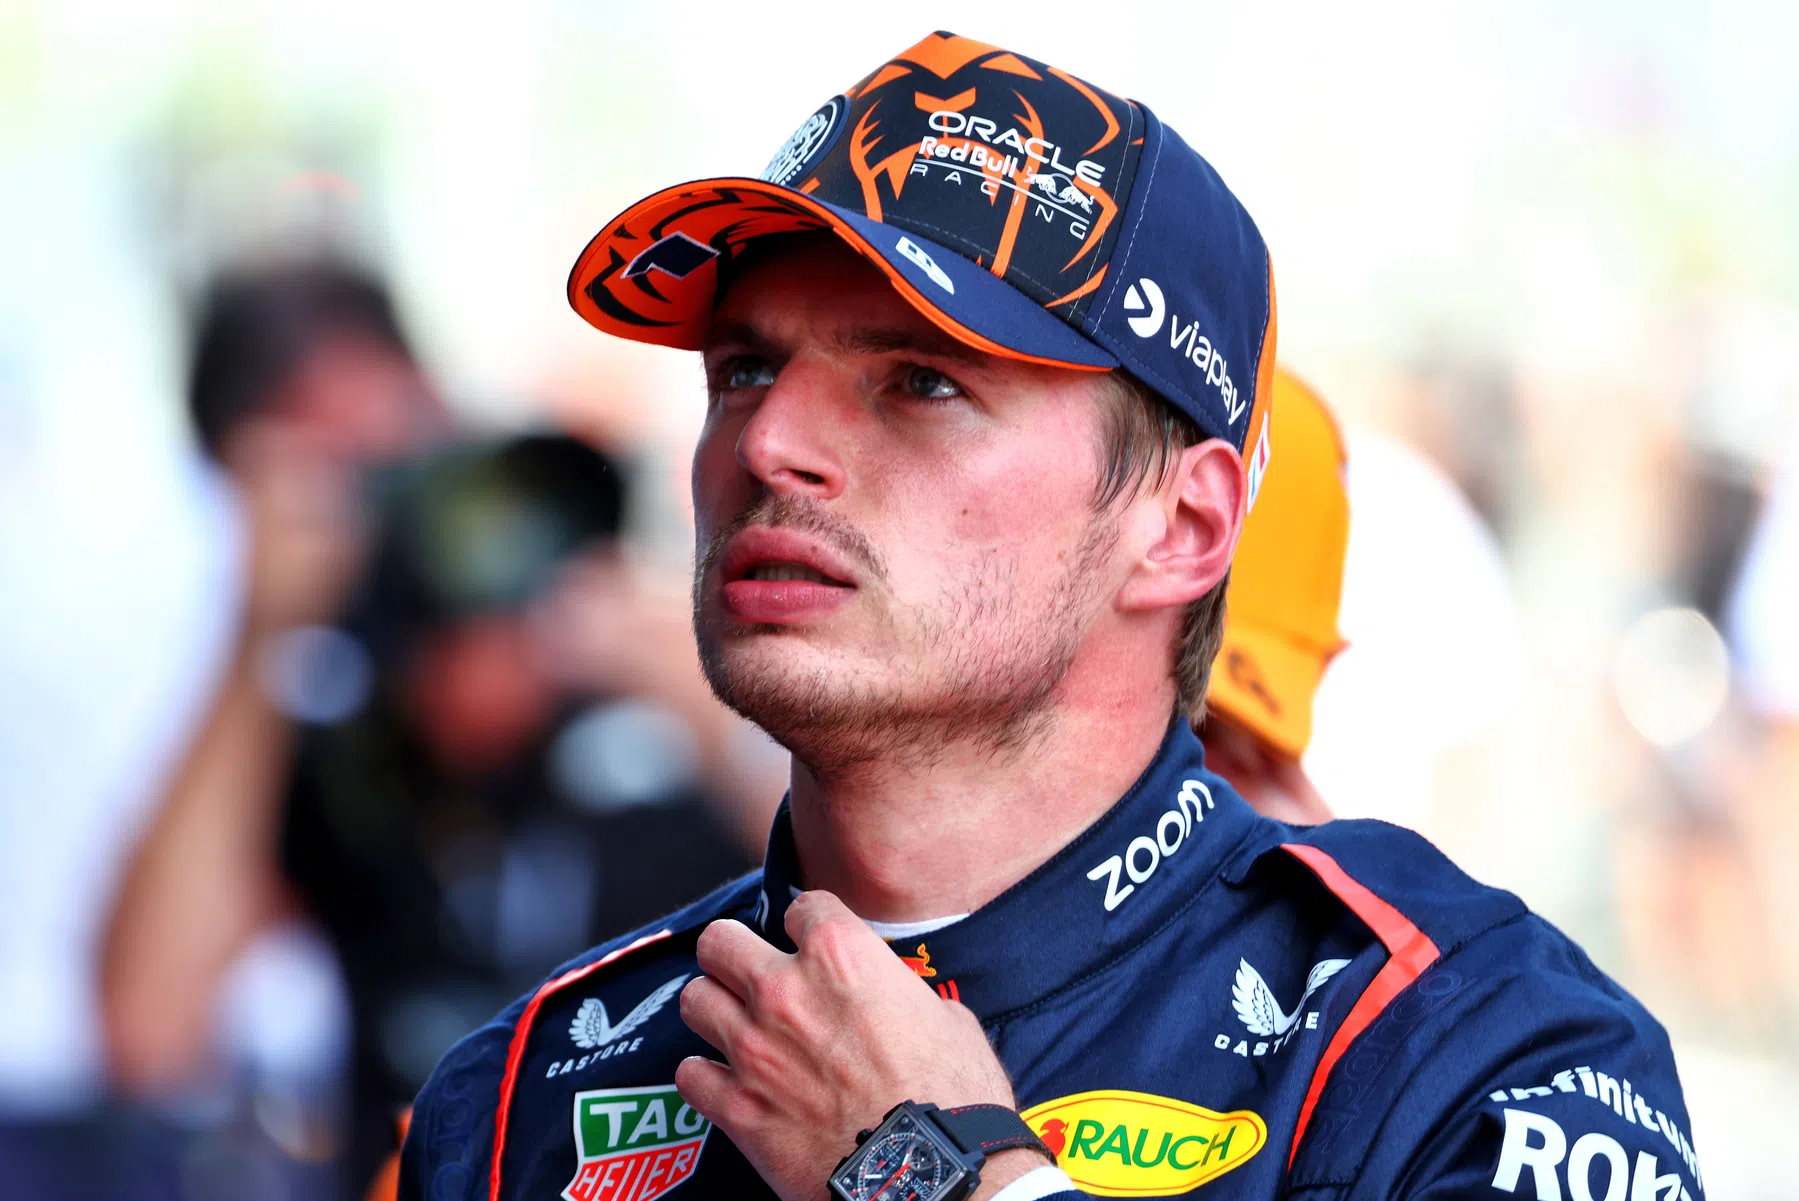 Russell tops power rankings in Austria after Verstappen drops